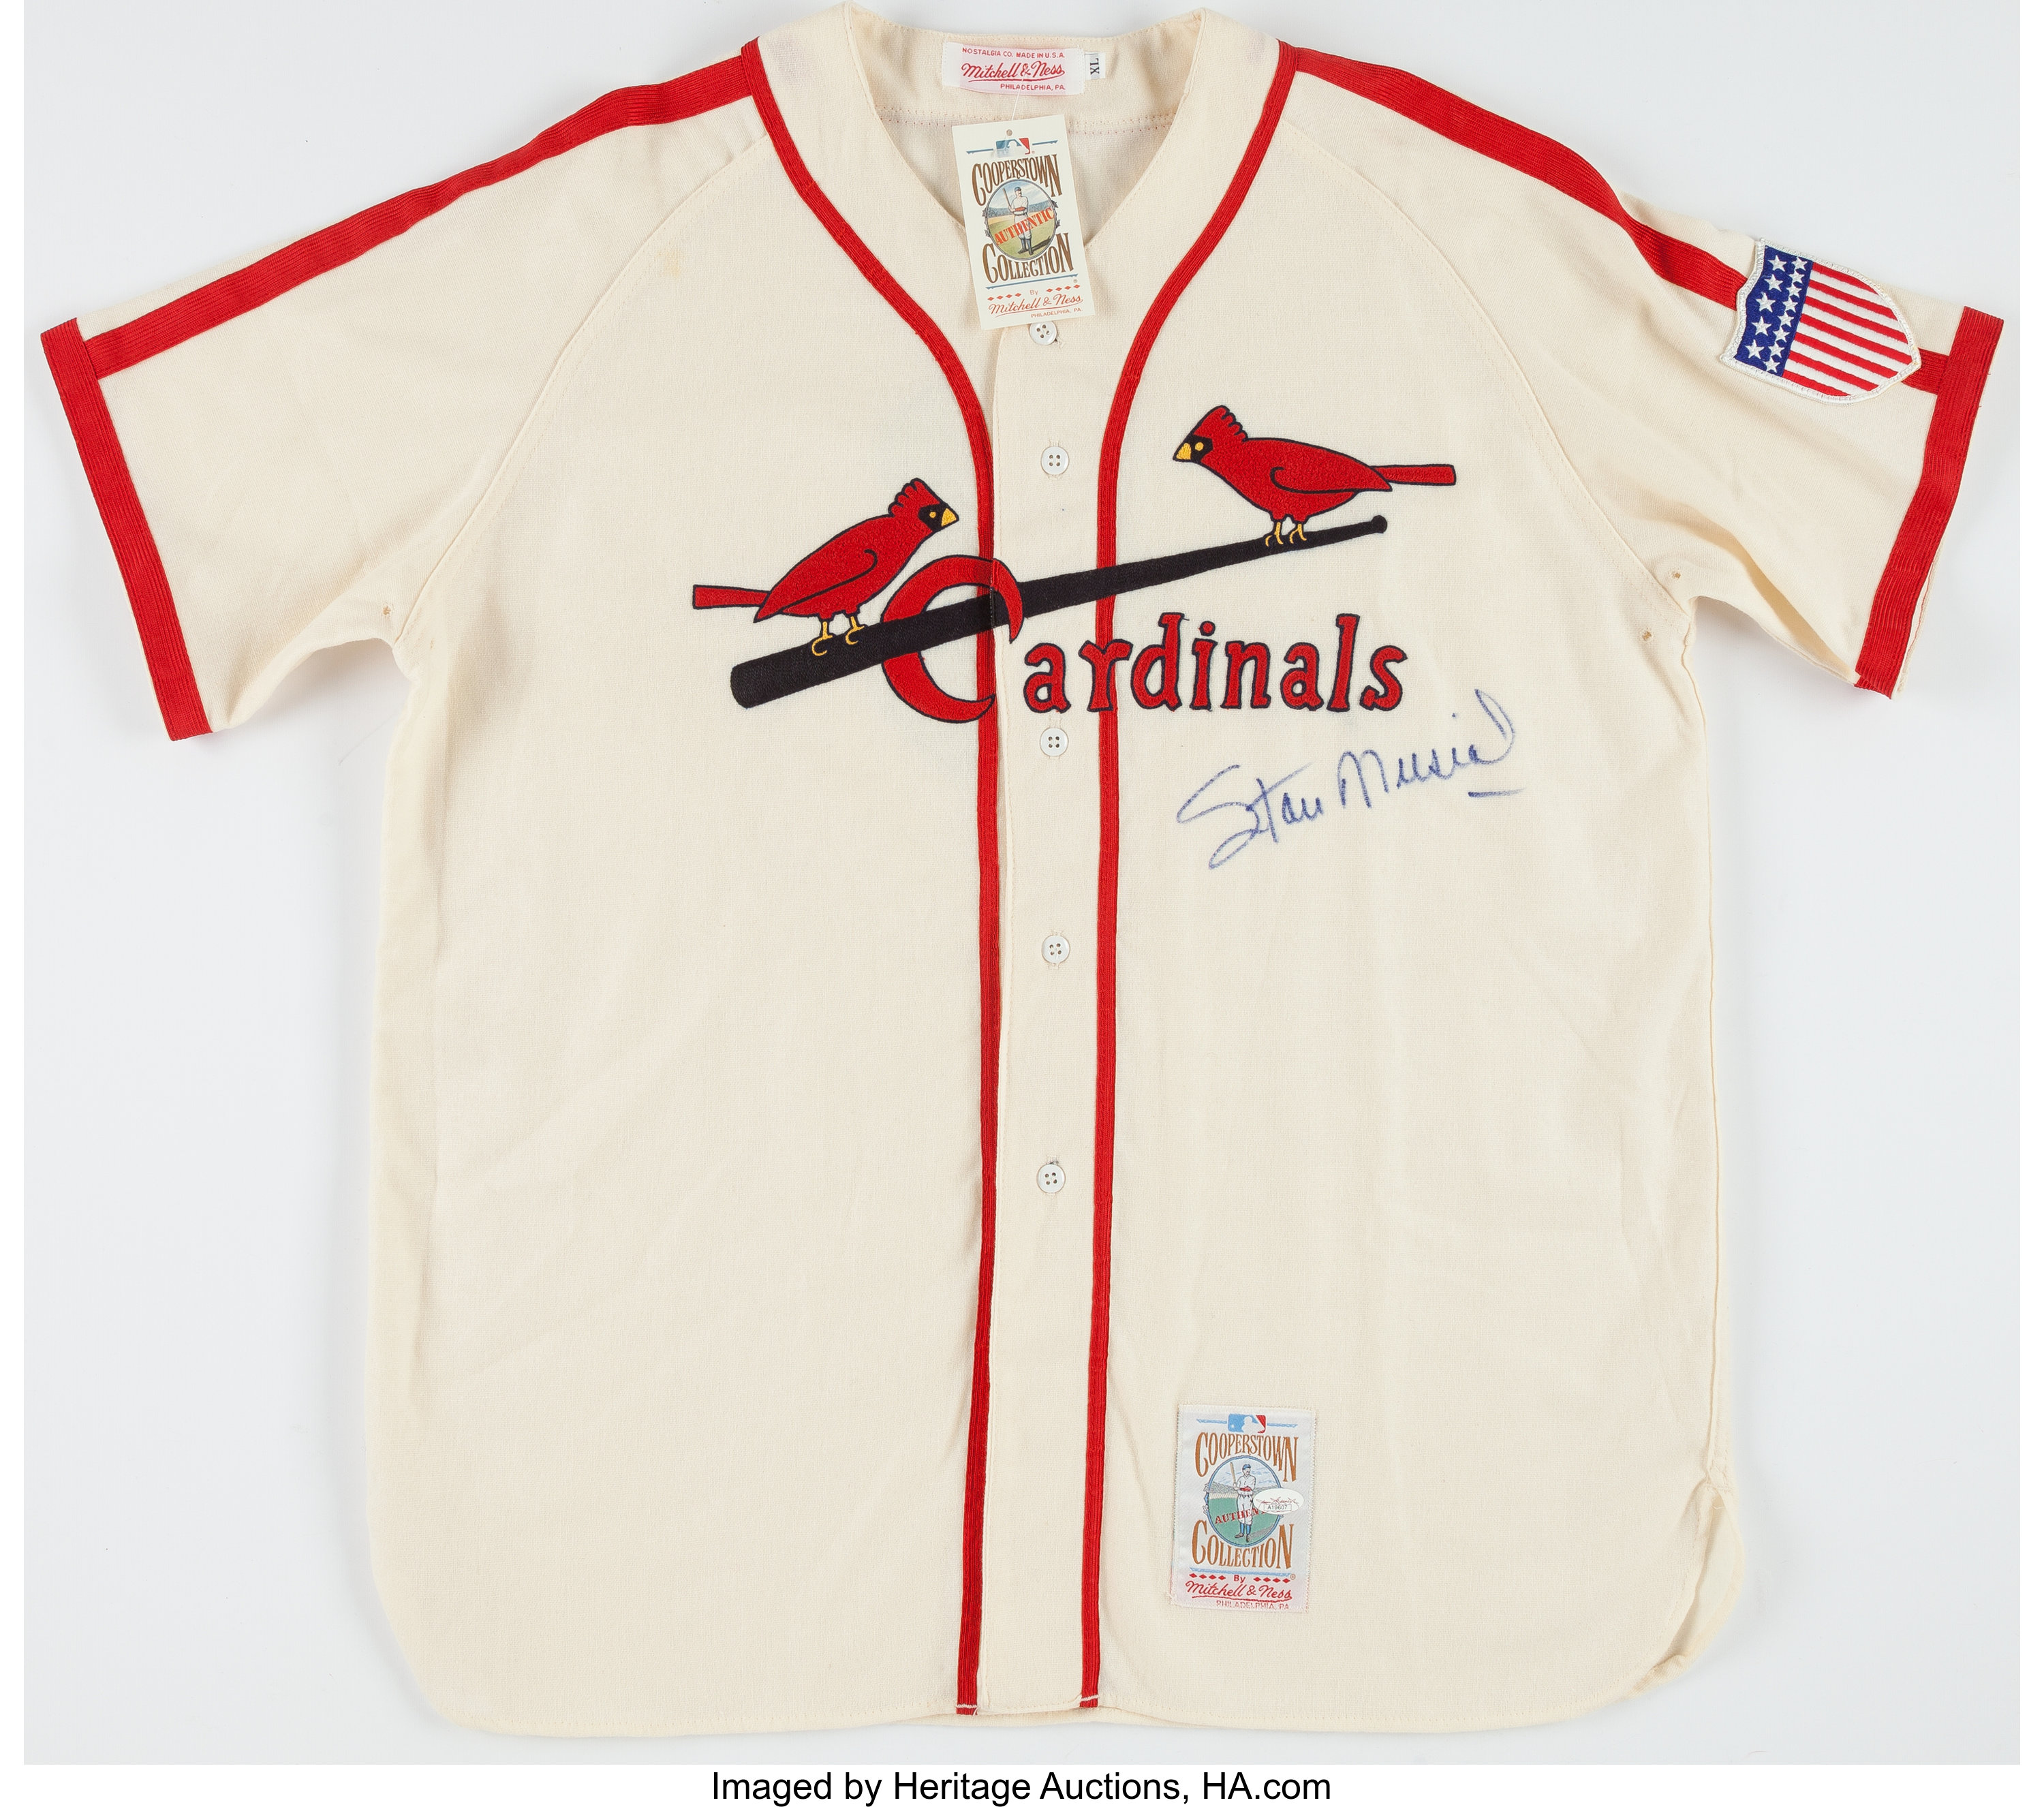 Stan Musial Signed St. Louis Cardinals Jersey. Baseball